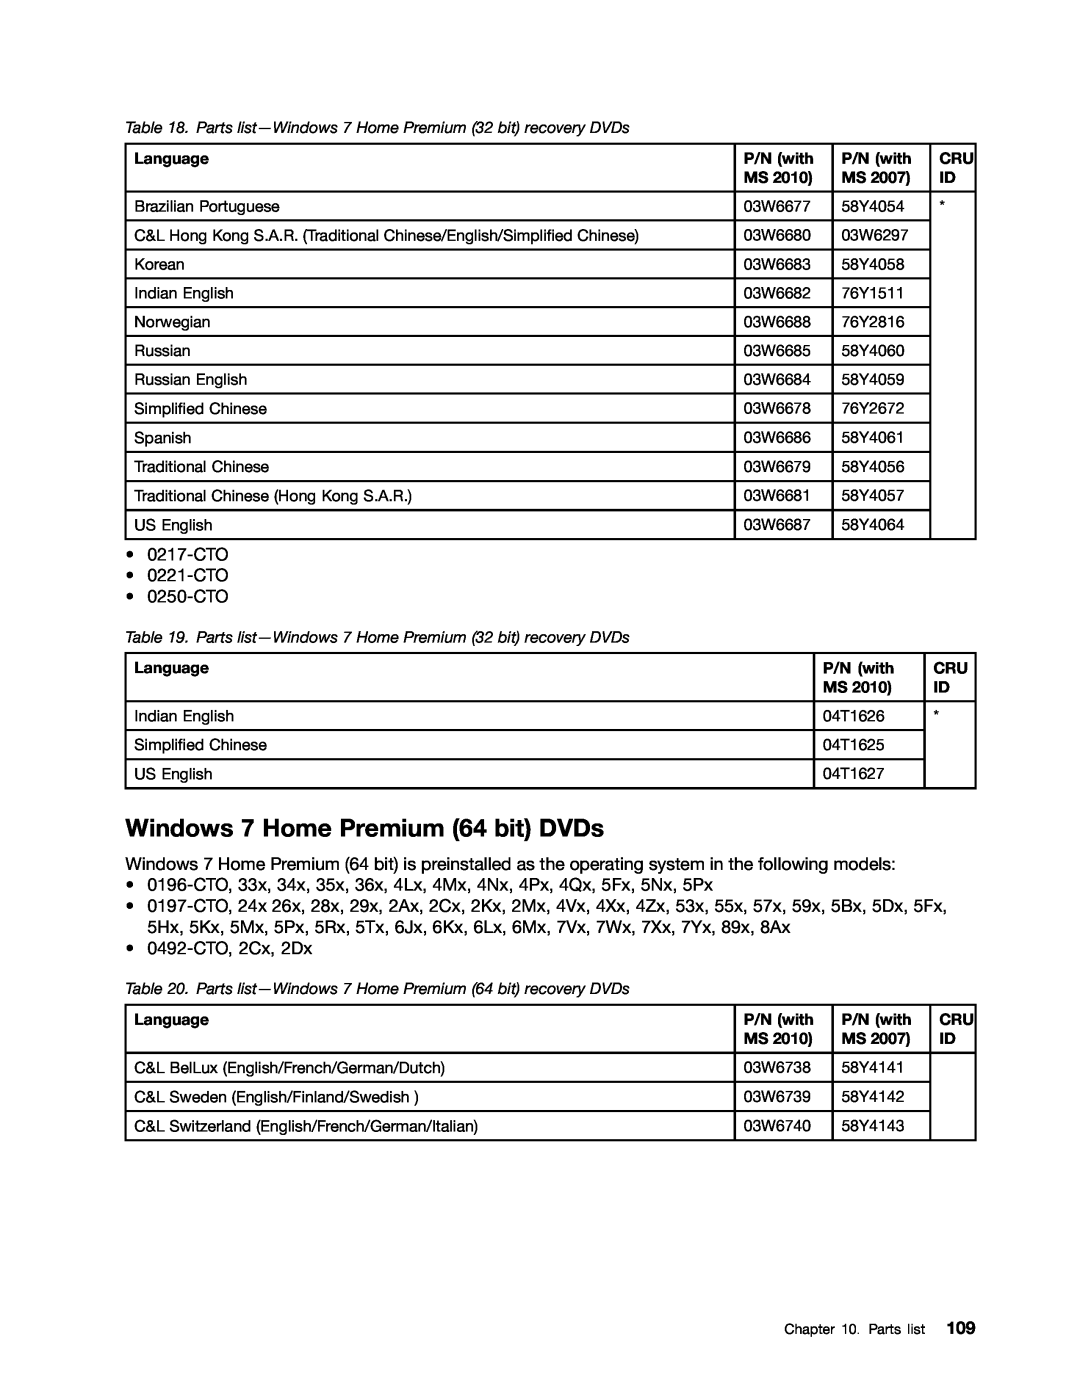 Lenovo E30, E31, EDGE 13 manual Windows 7 Home Premium 64 bit DVDs, CTO 0221-CTO 0250-CTO, 0492-CTO, 2Cx, 2Dx 